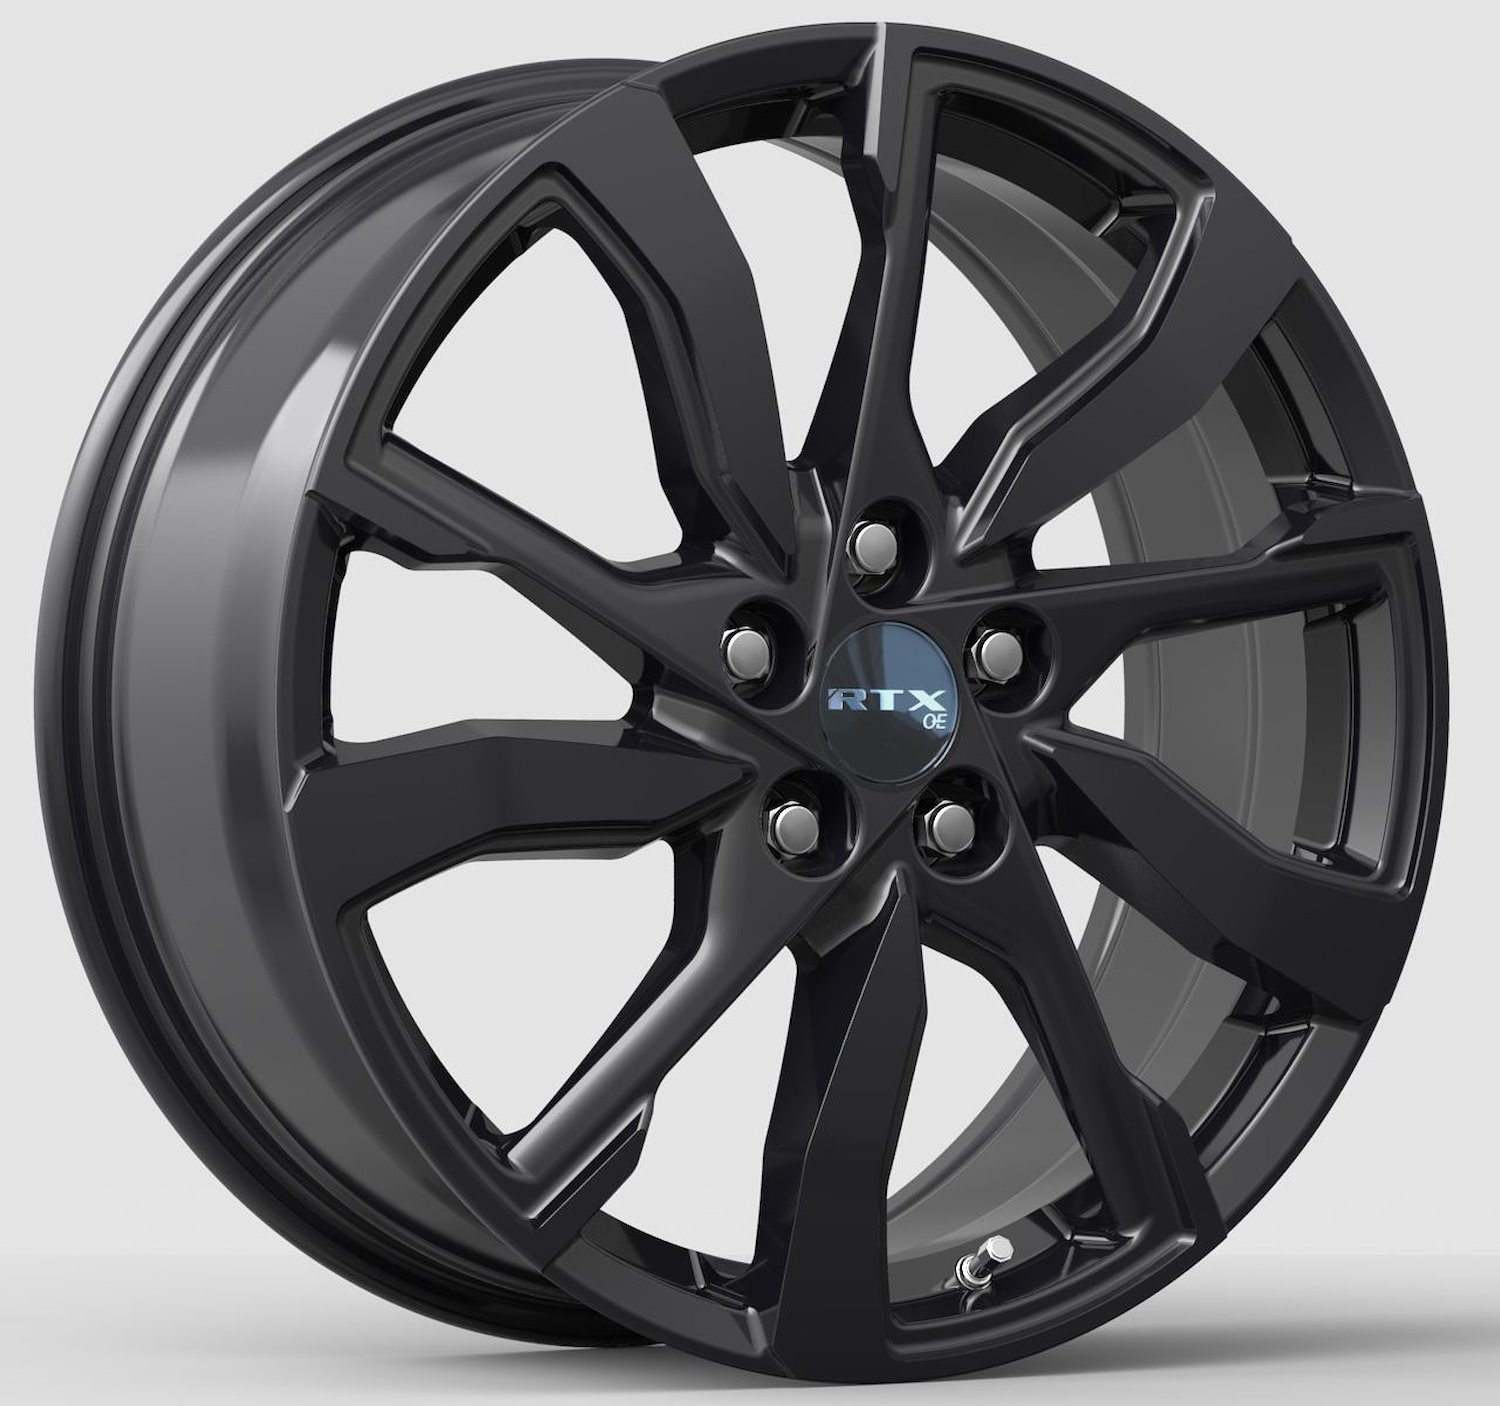 083267 OE-Series GM-07 Wheel [Size: 17" x 7"] Gloss Black Finish